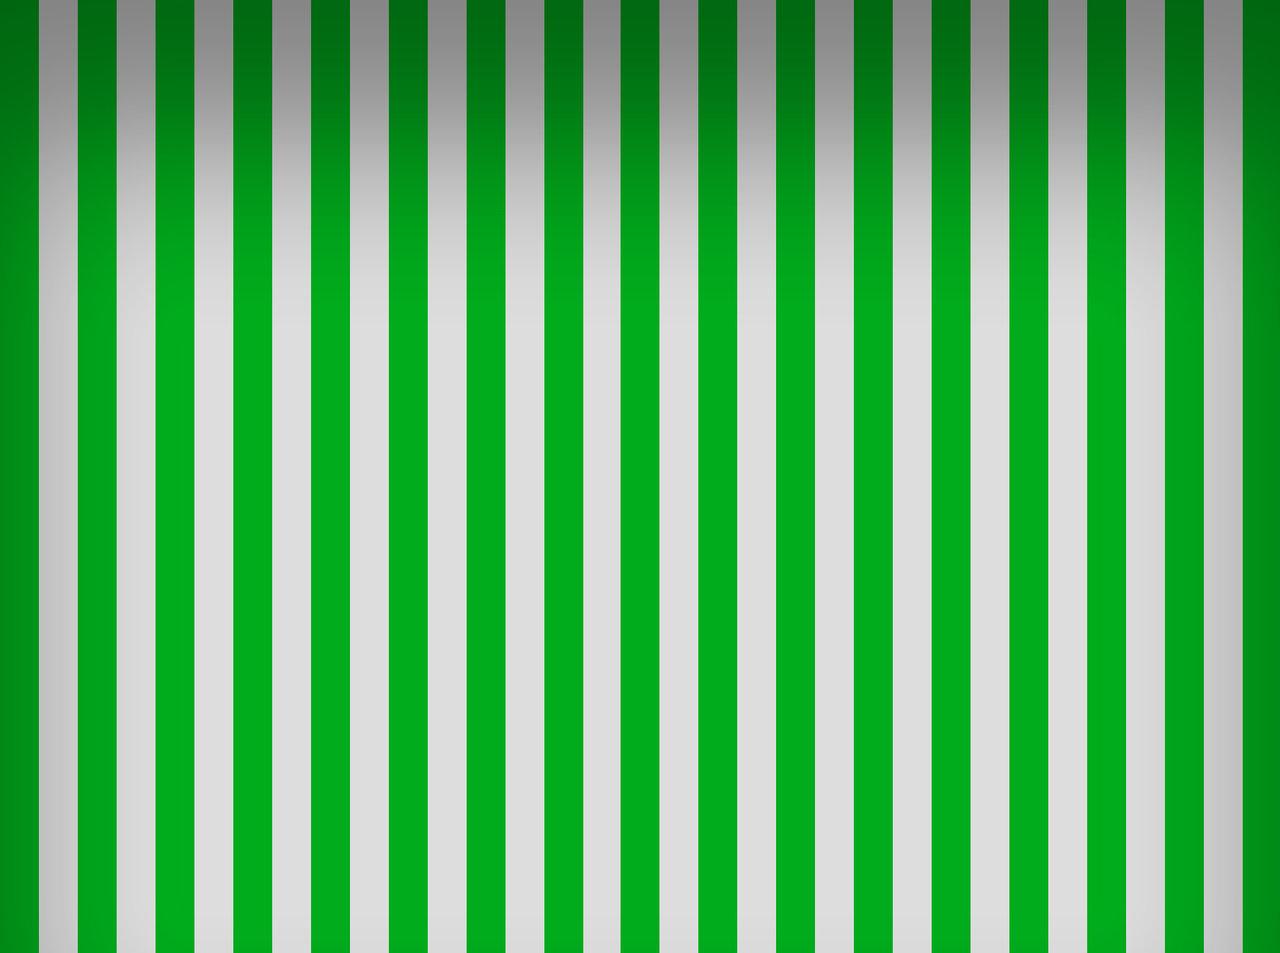 Free download green white striped wallpaper